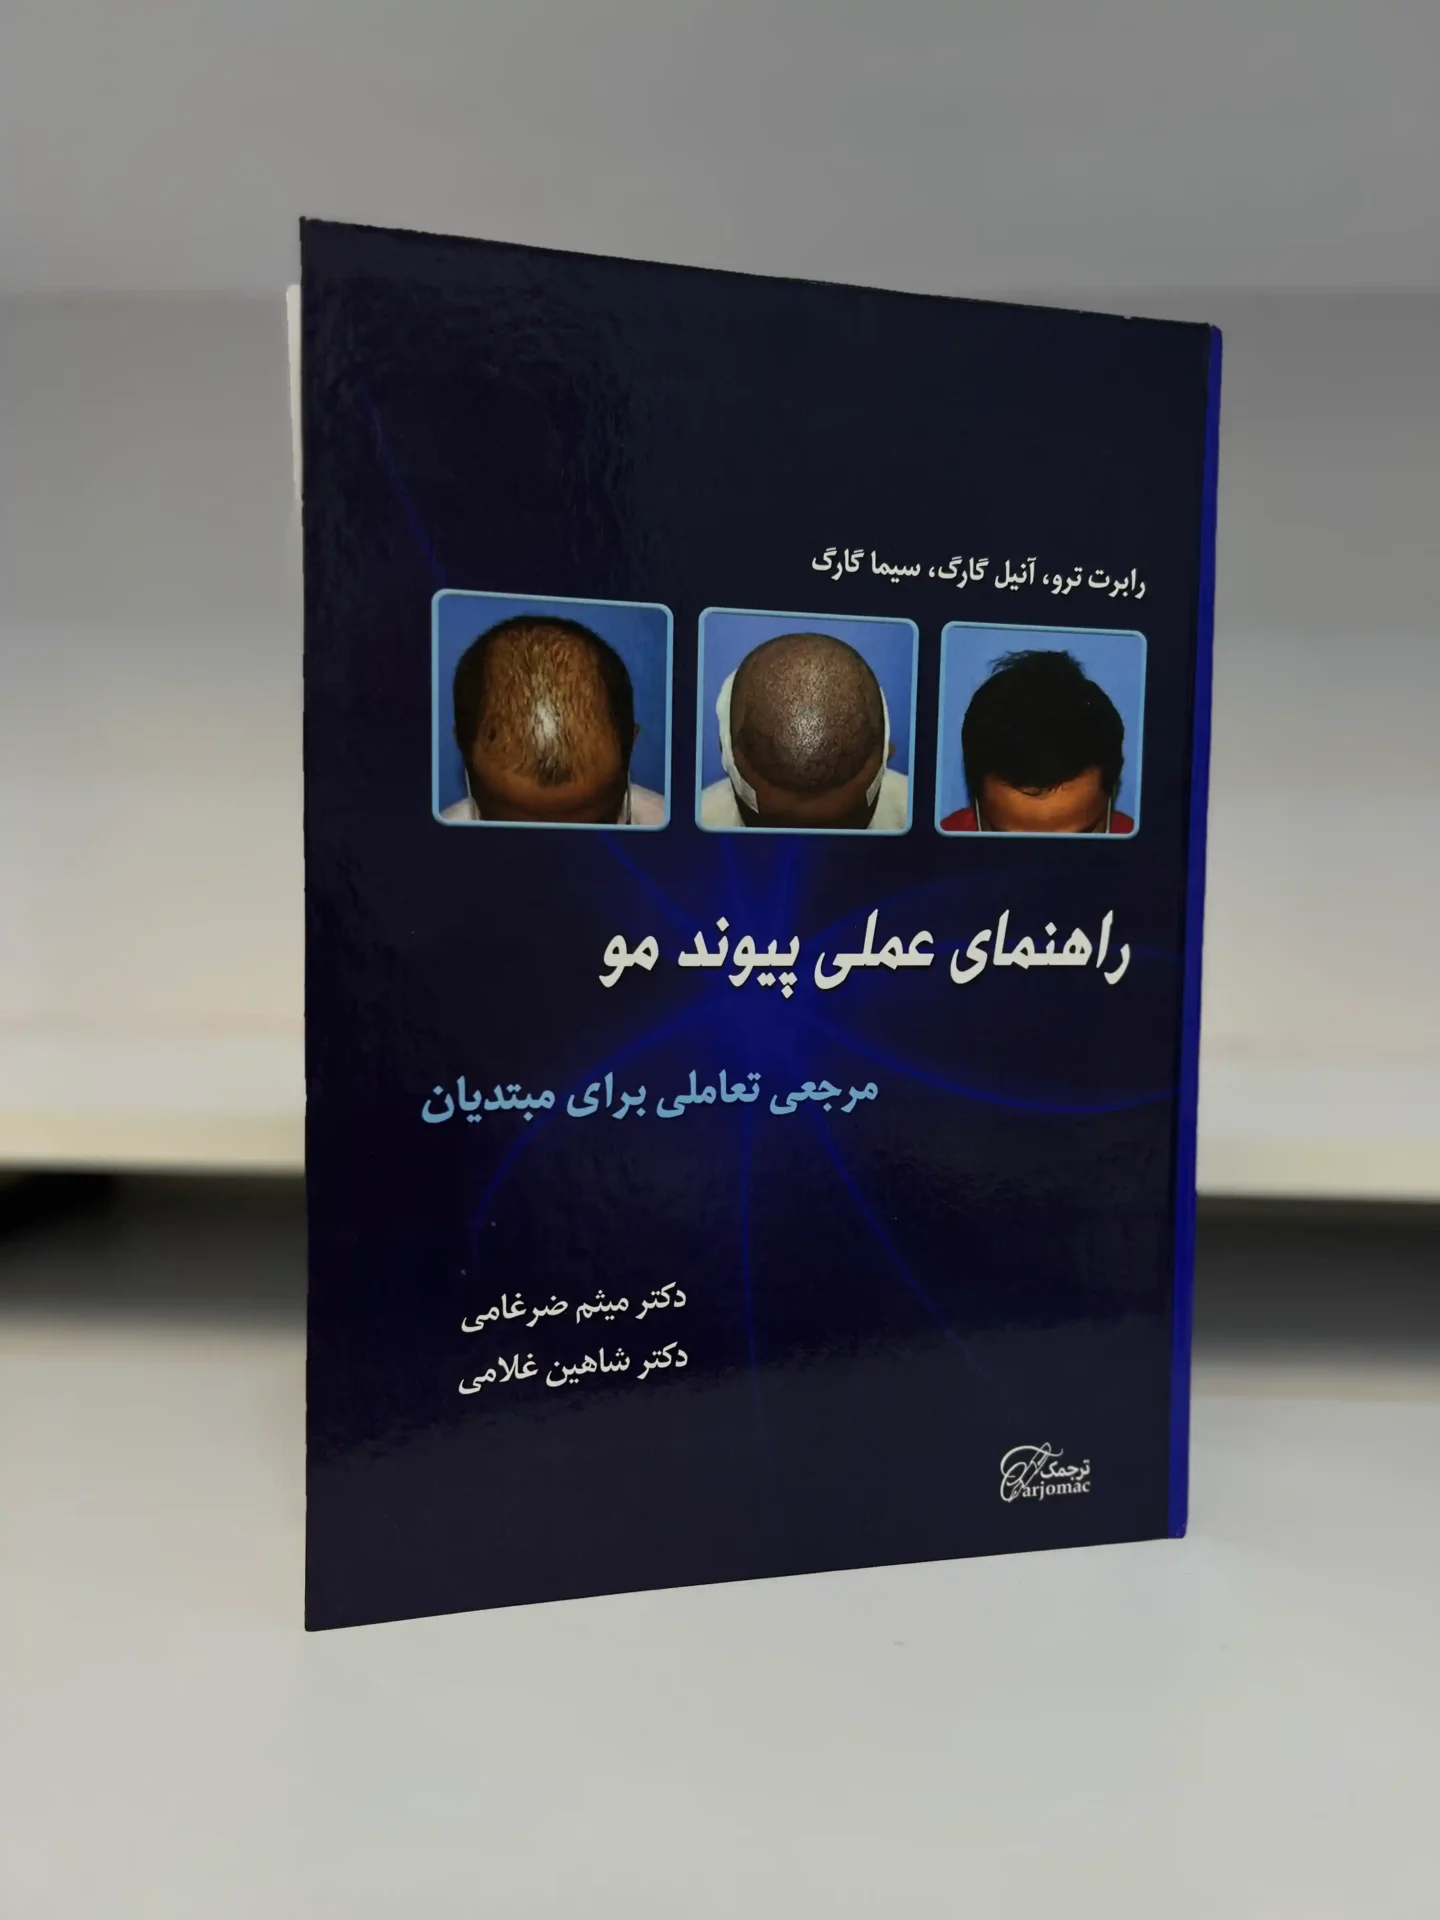 Dr. Zarghami's hair transplant book